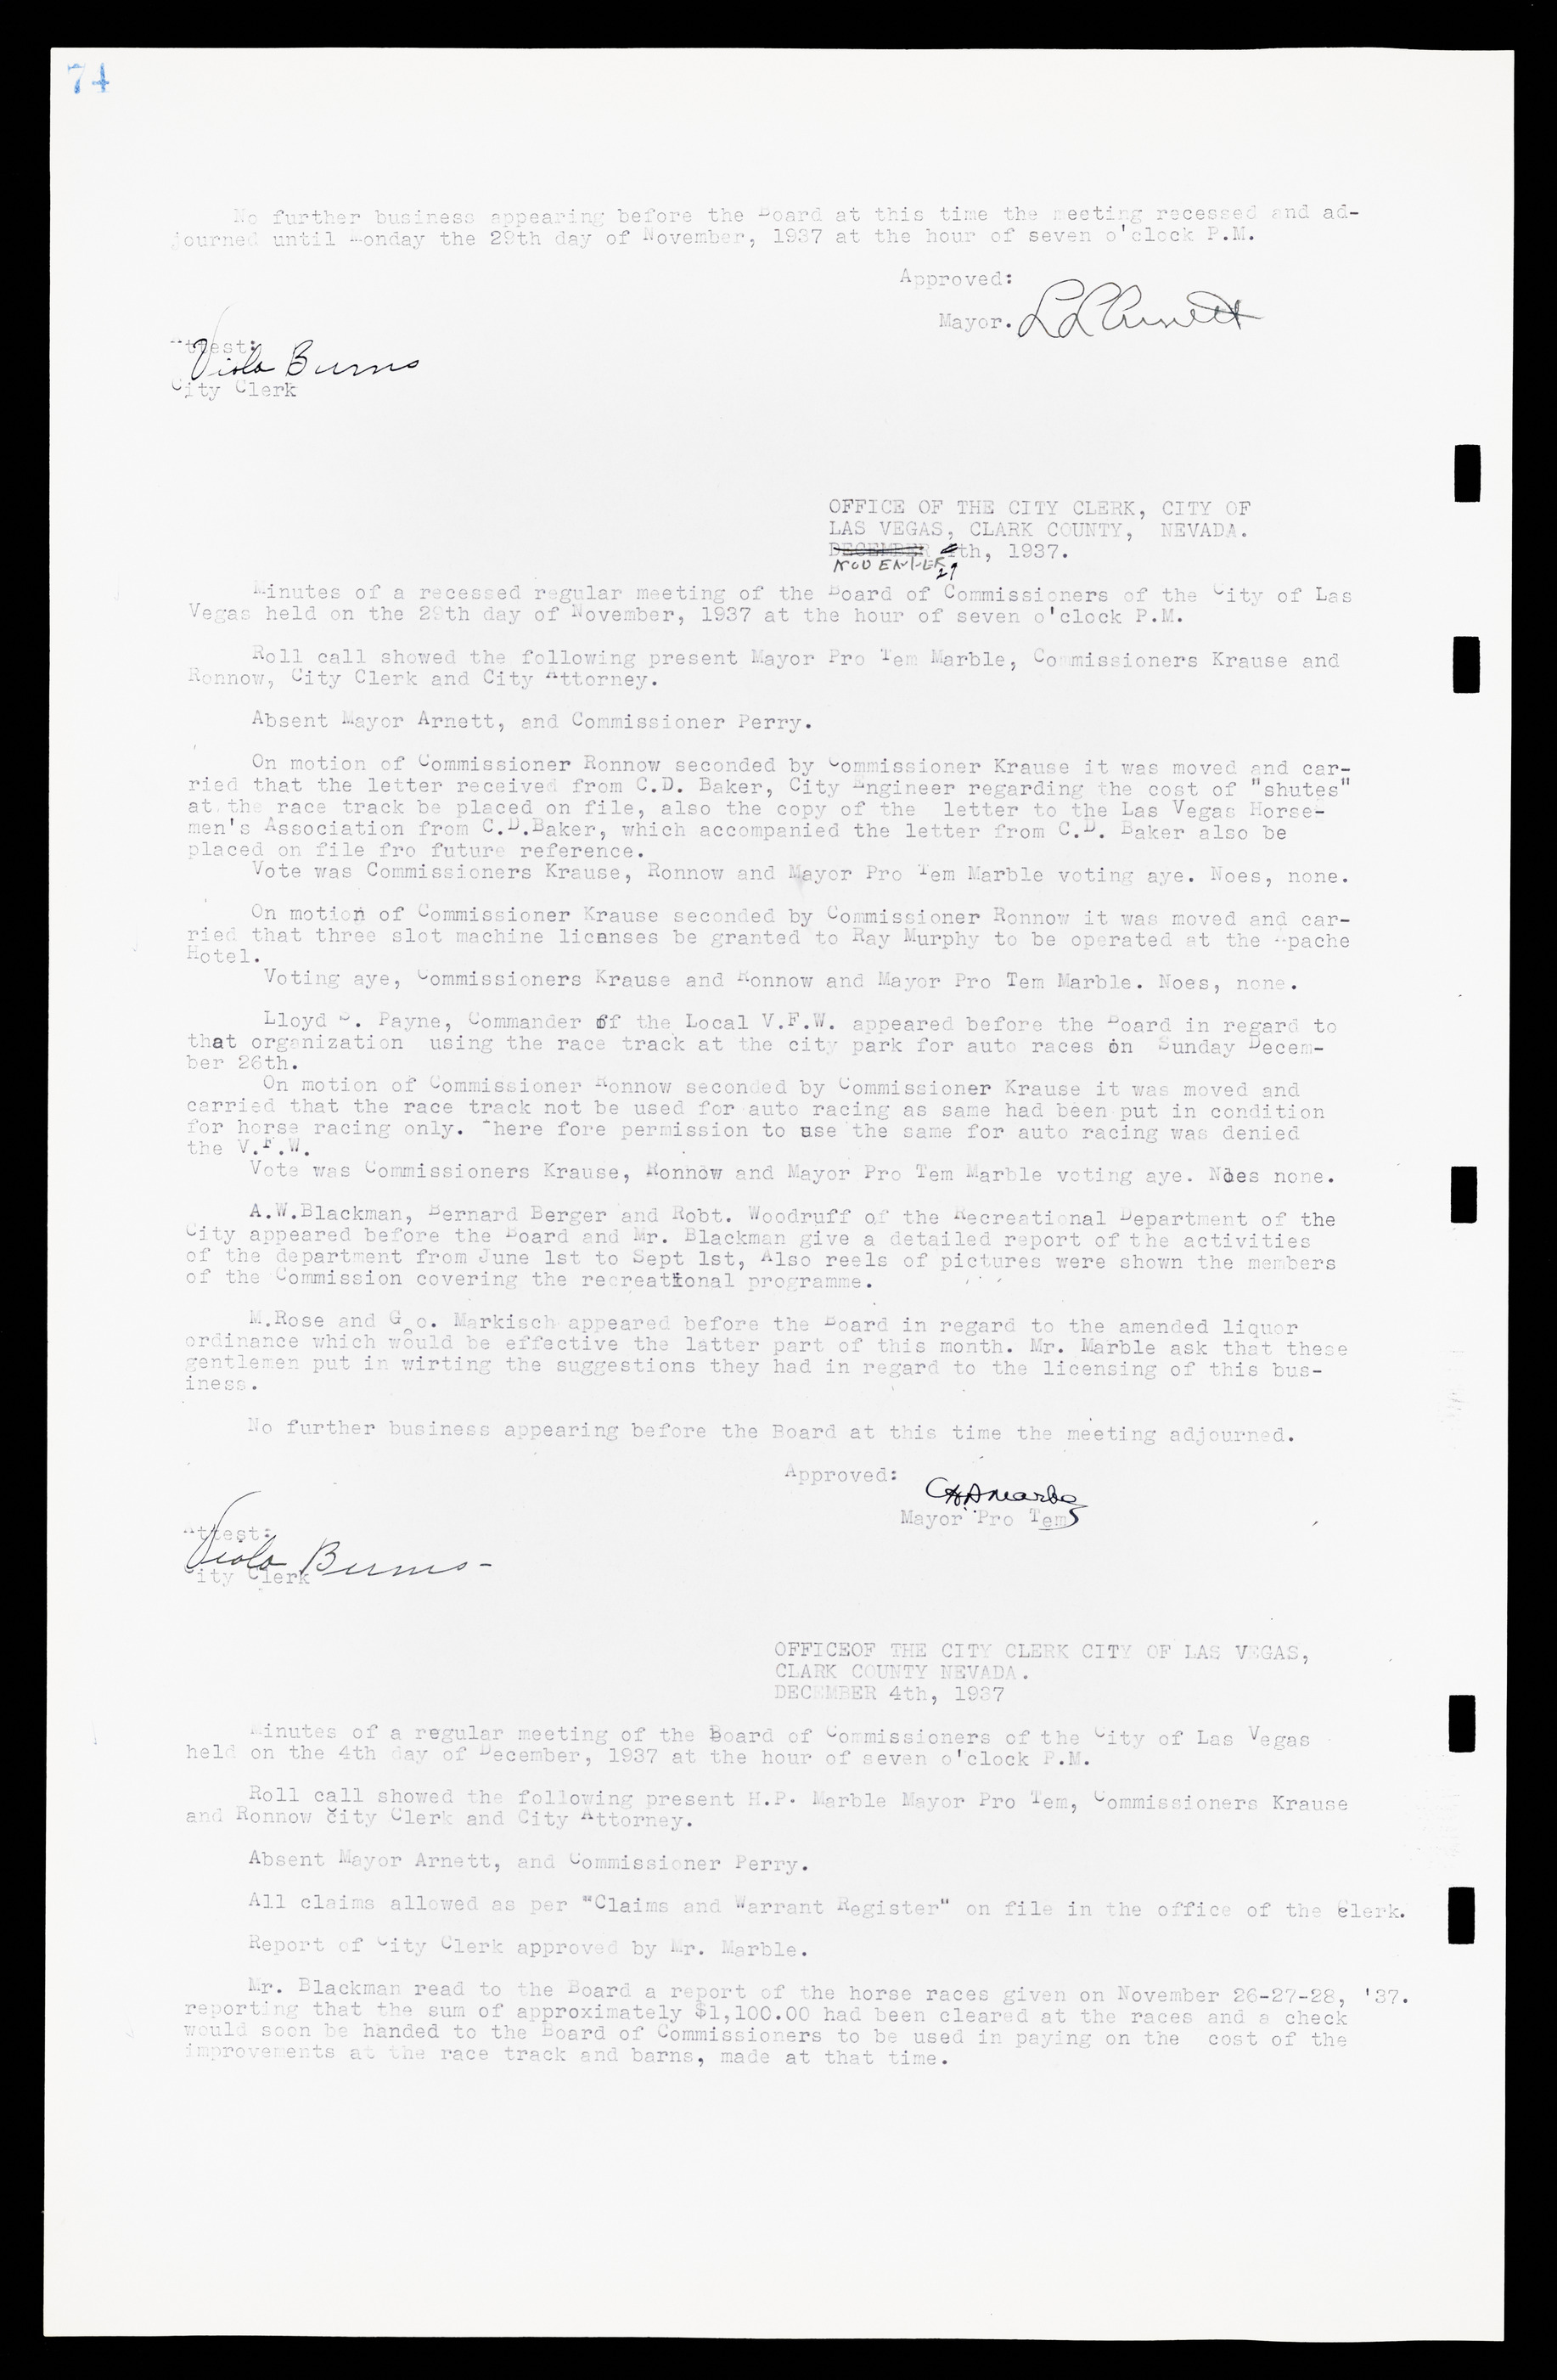 Las Vegas City Commission Minutes, February 17, 1937 to August 4, 1942, lvc000004-83